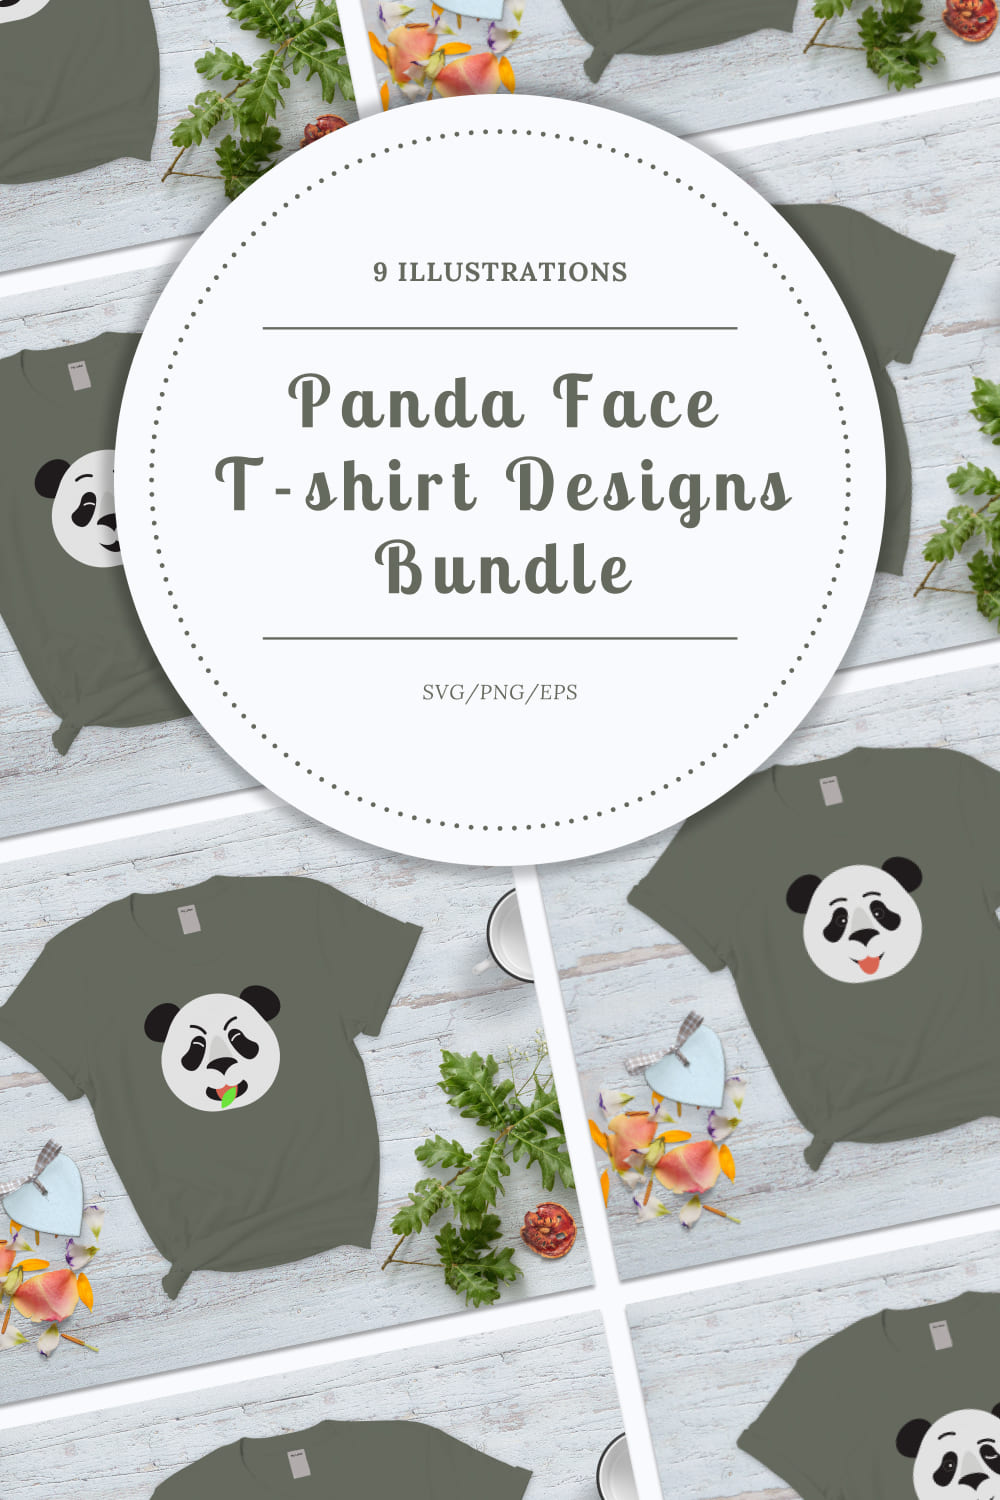 Panda Face Svg T-shirt Designs Bundle - Pinterest.